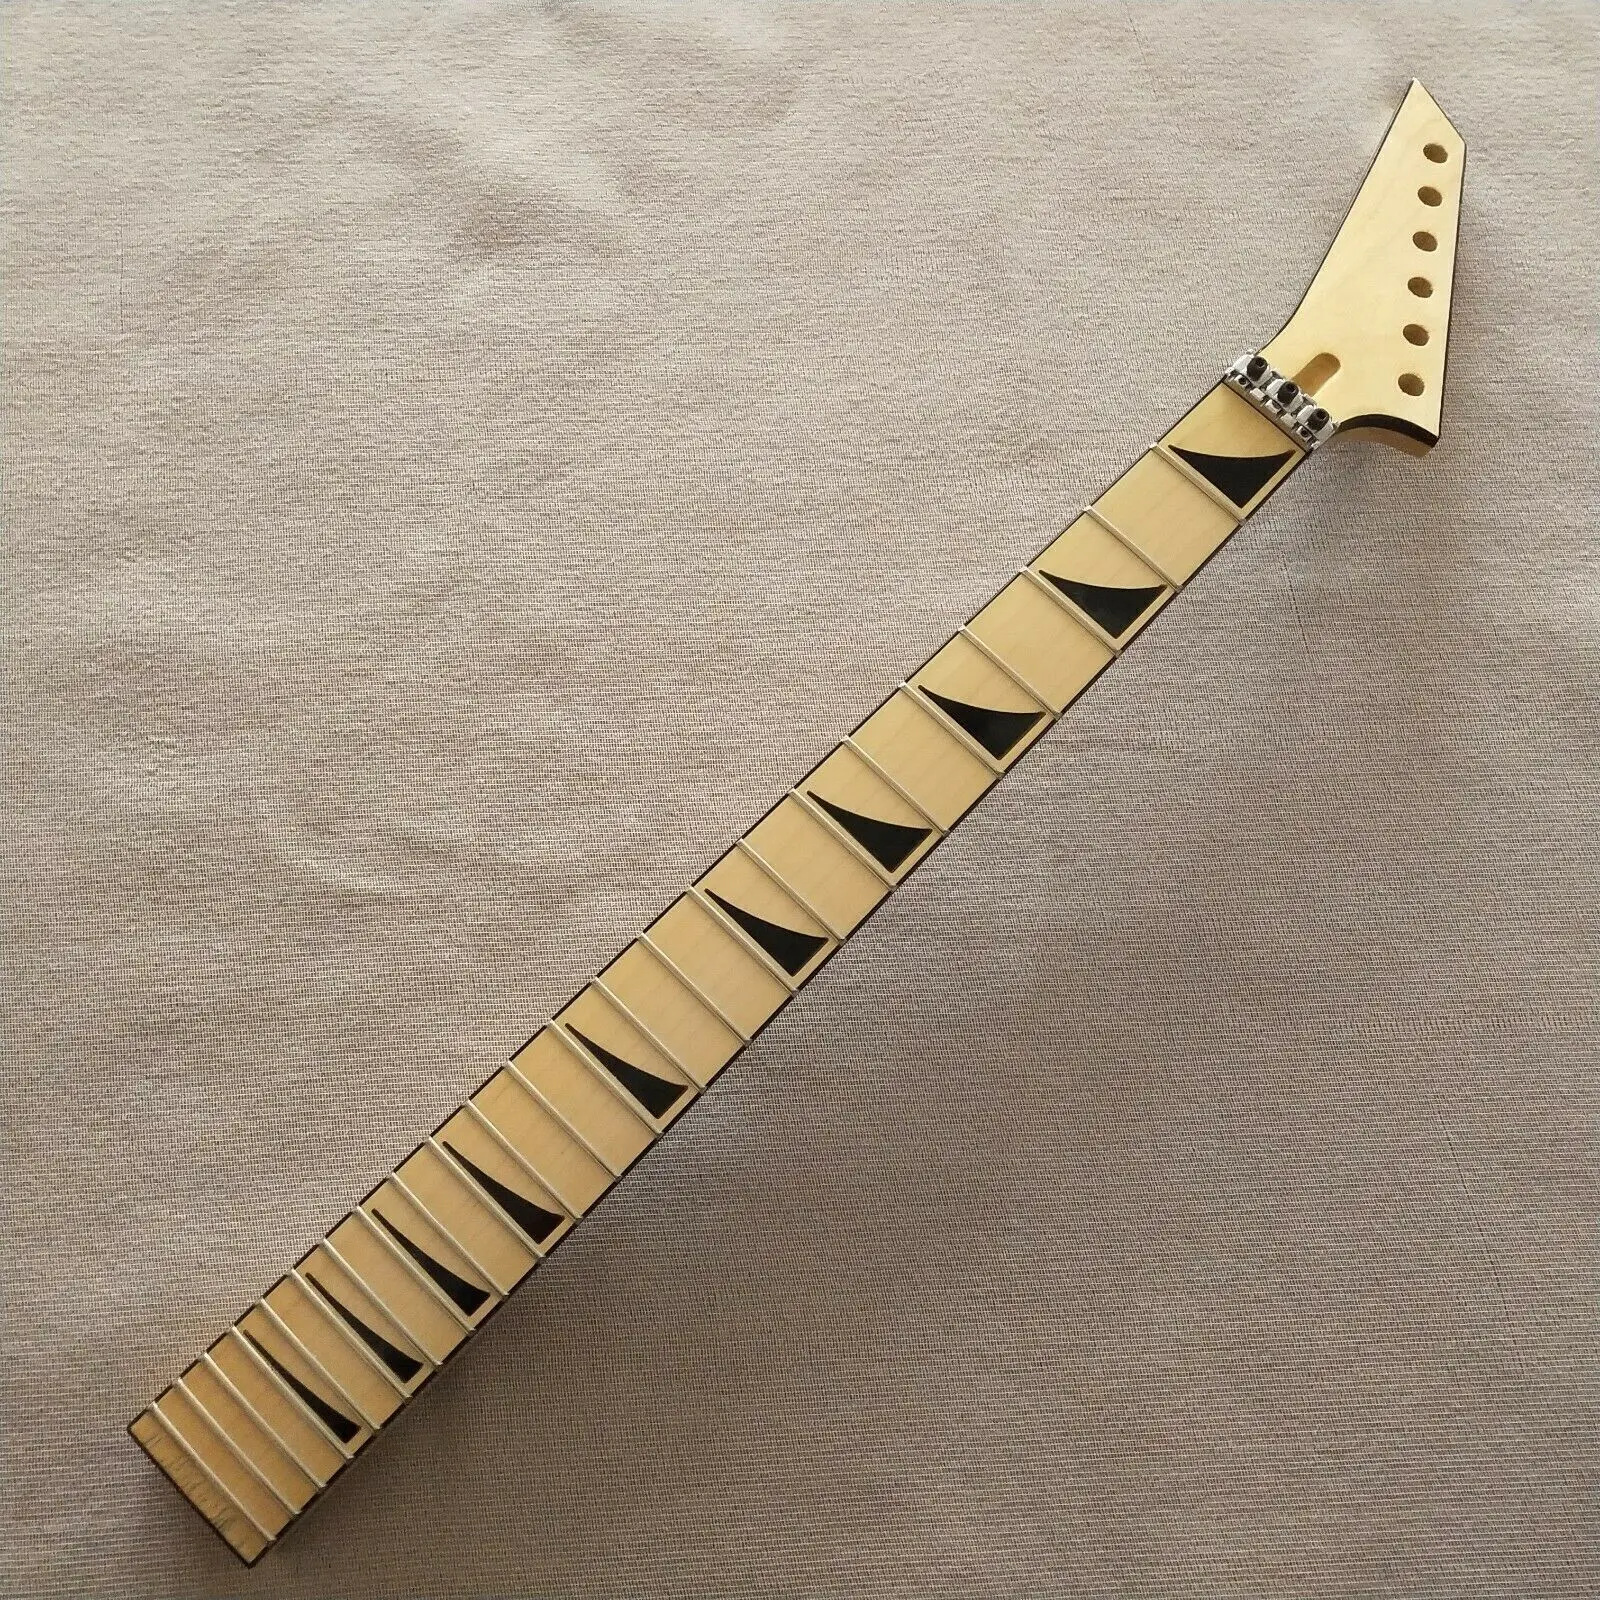 New 24Fret 25.5inch Reverse head Maple Jackson style Guitar Neck Maple Fretboard enlarge